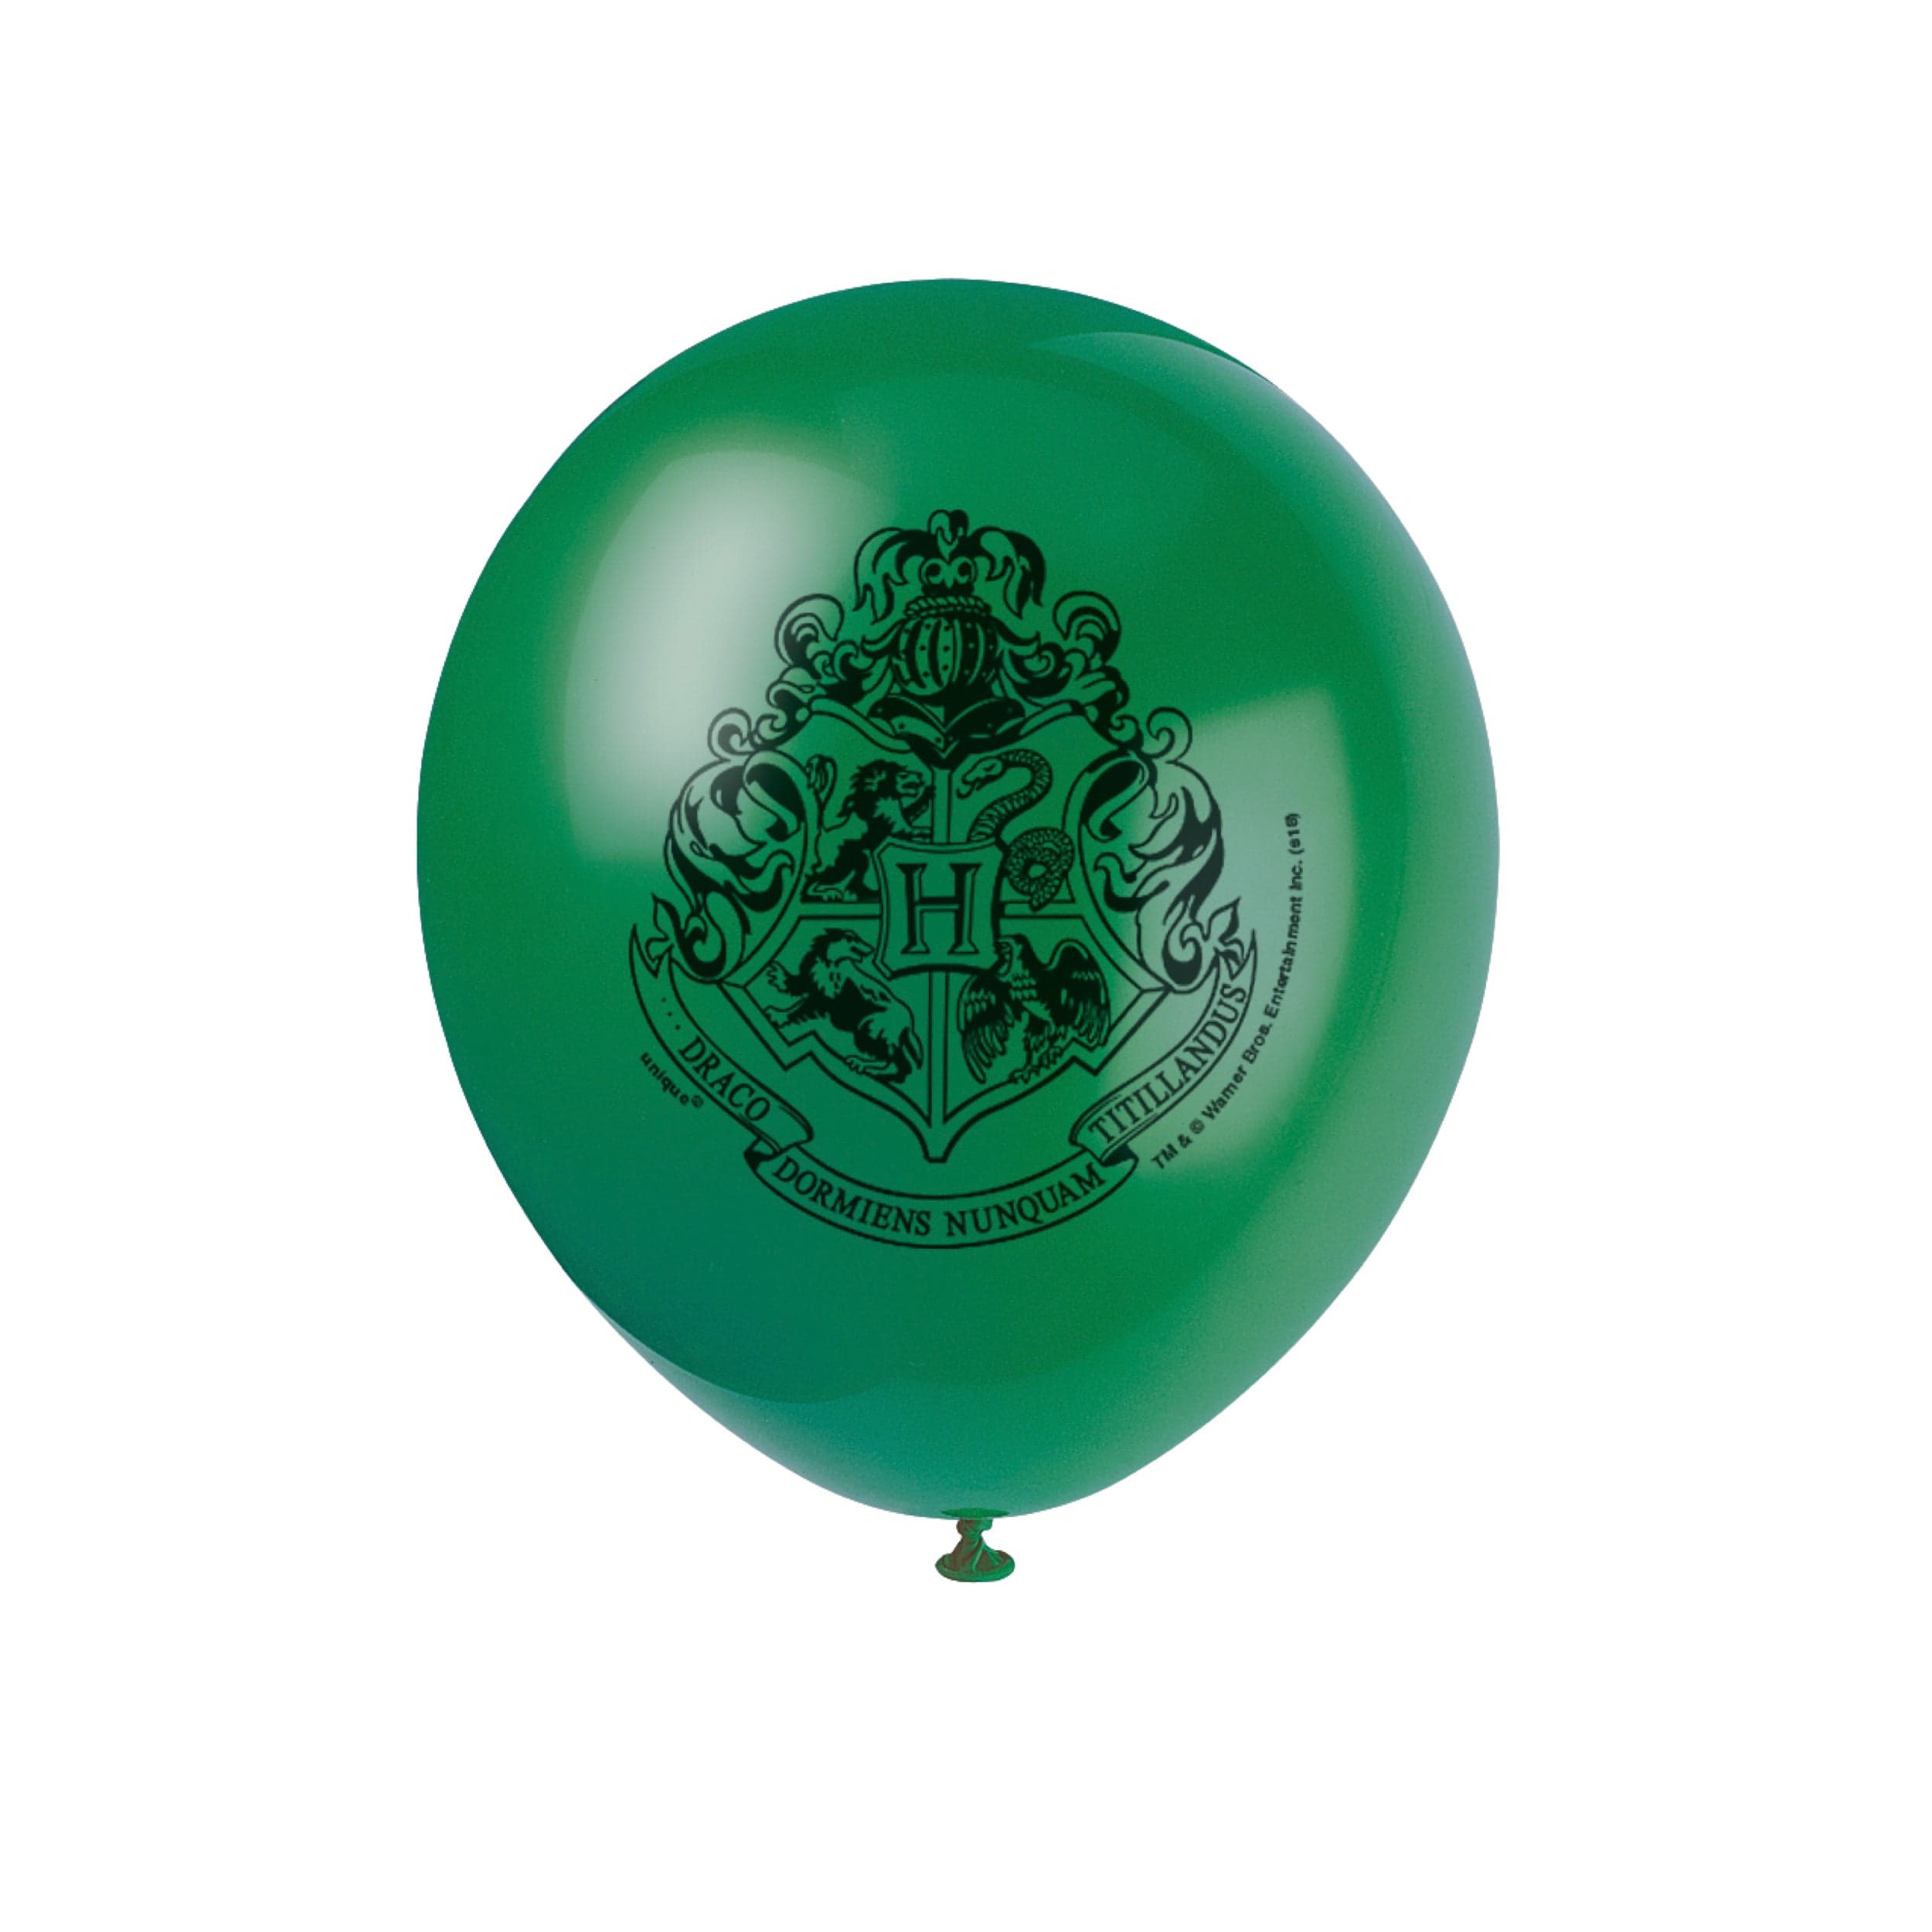  Harry Potter Hogwarts Latex Balloons, Gray, Black - 12, Pack  of 6 : Toys & Games